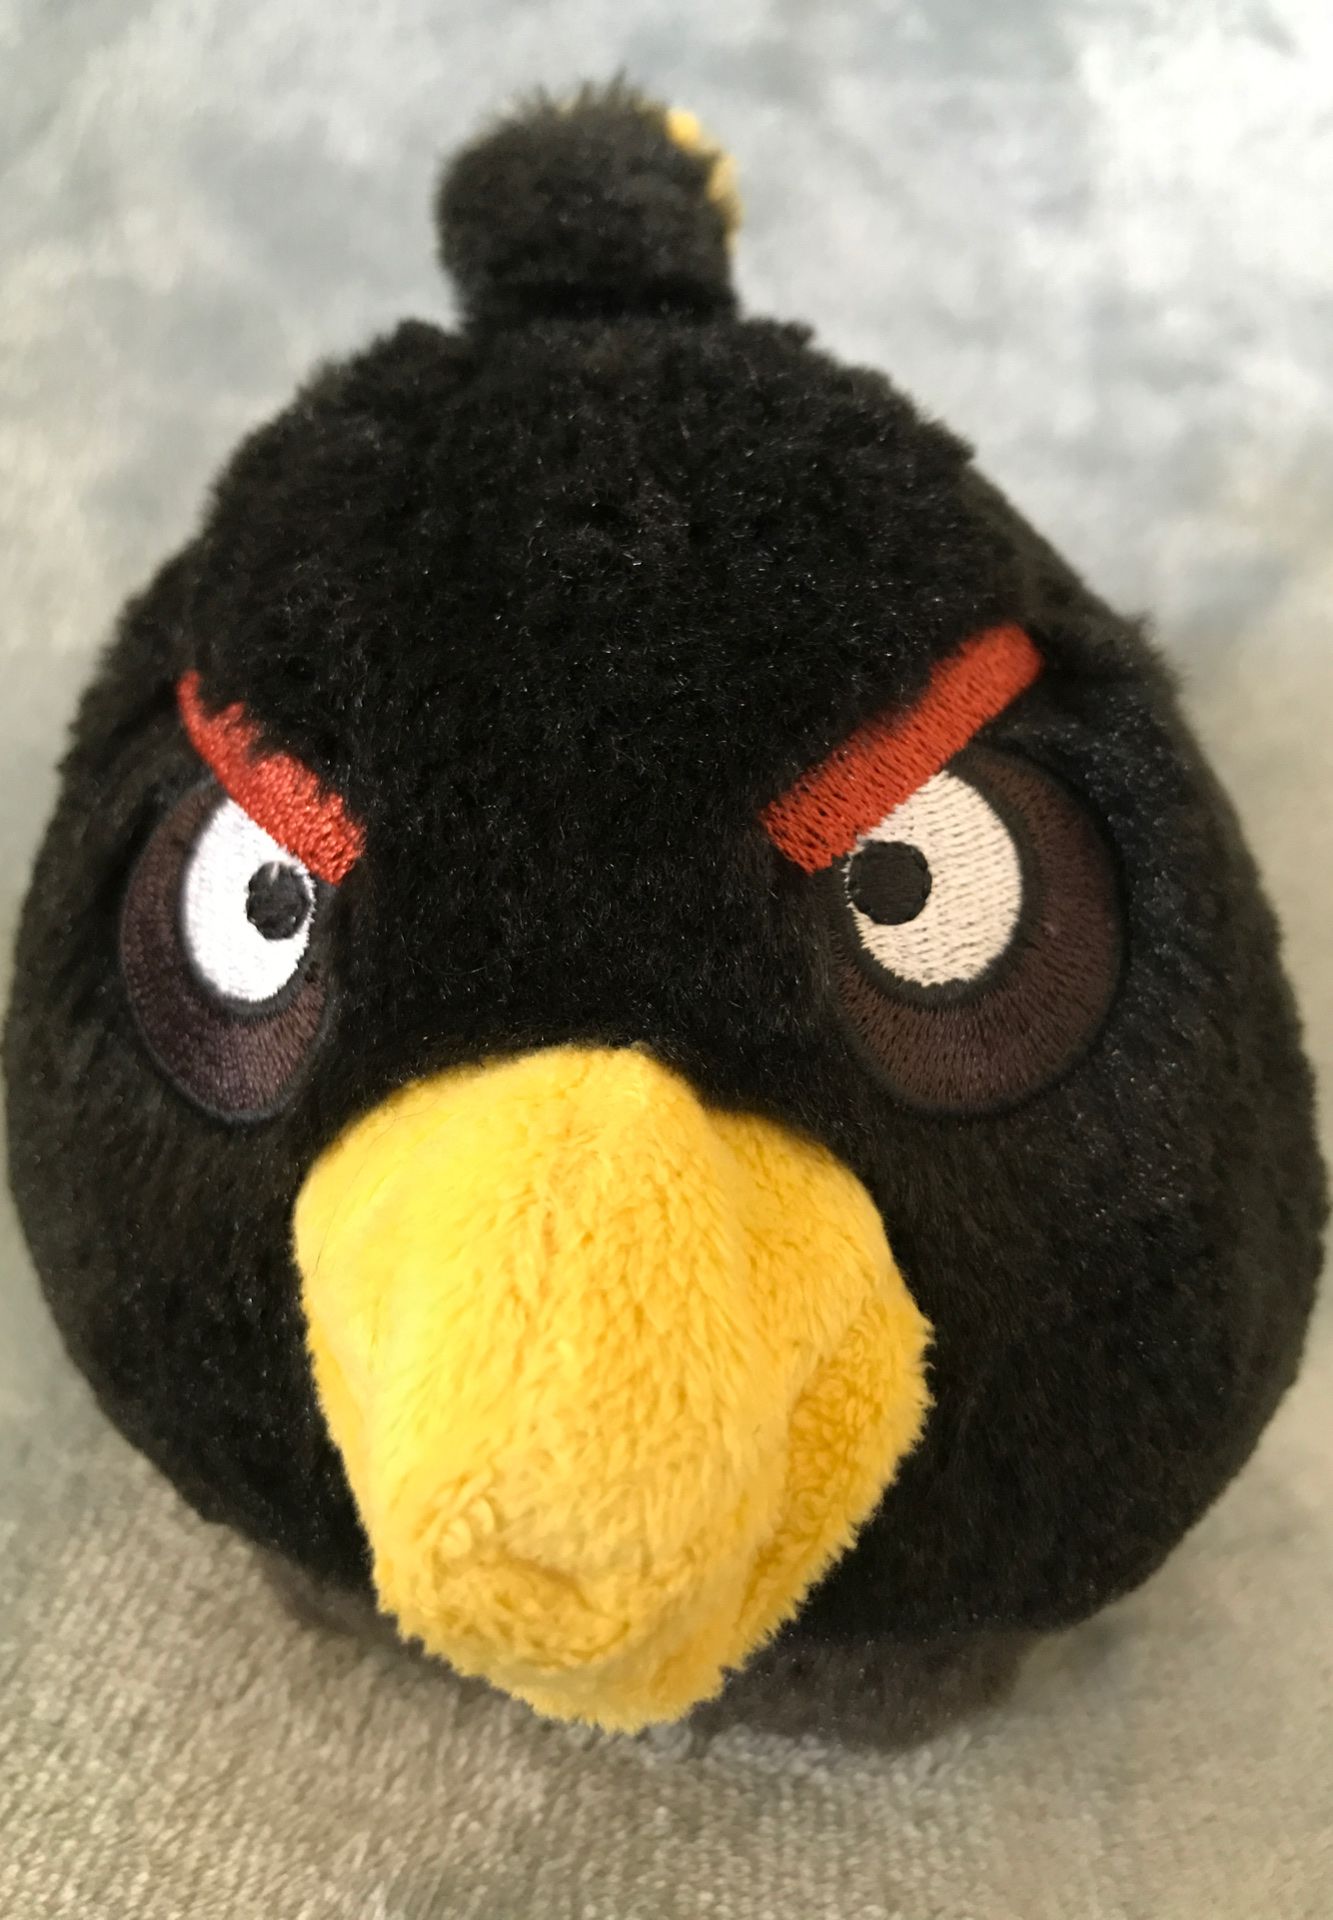 6” angry Birds stuffed animal.